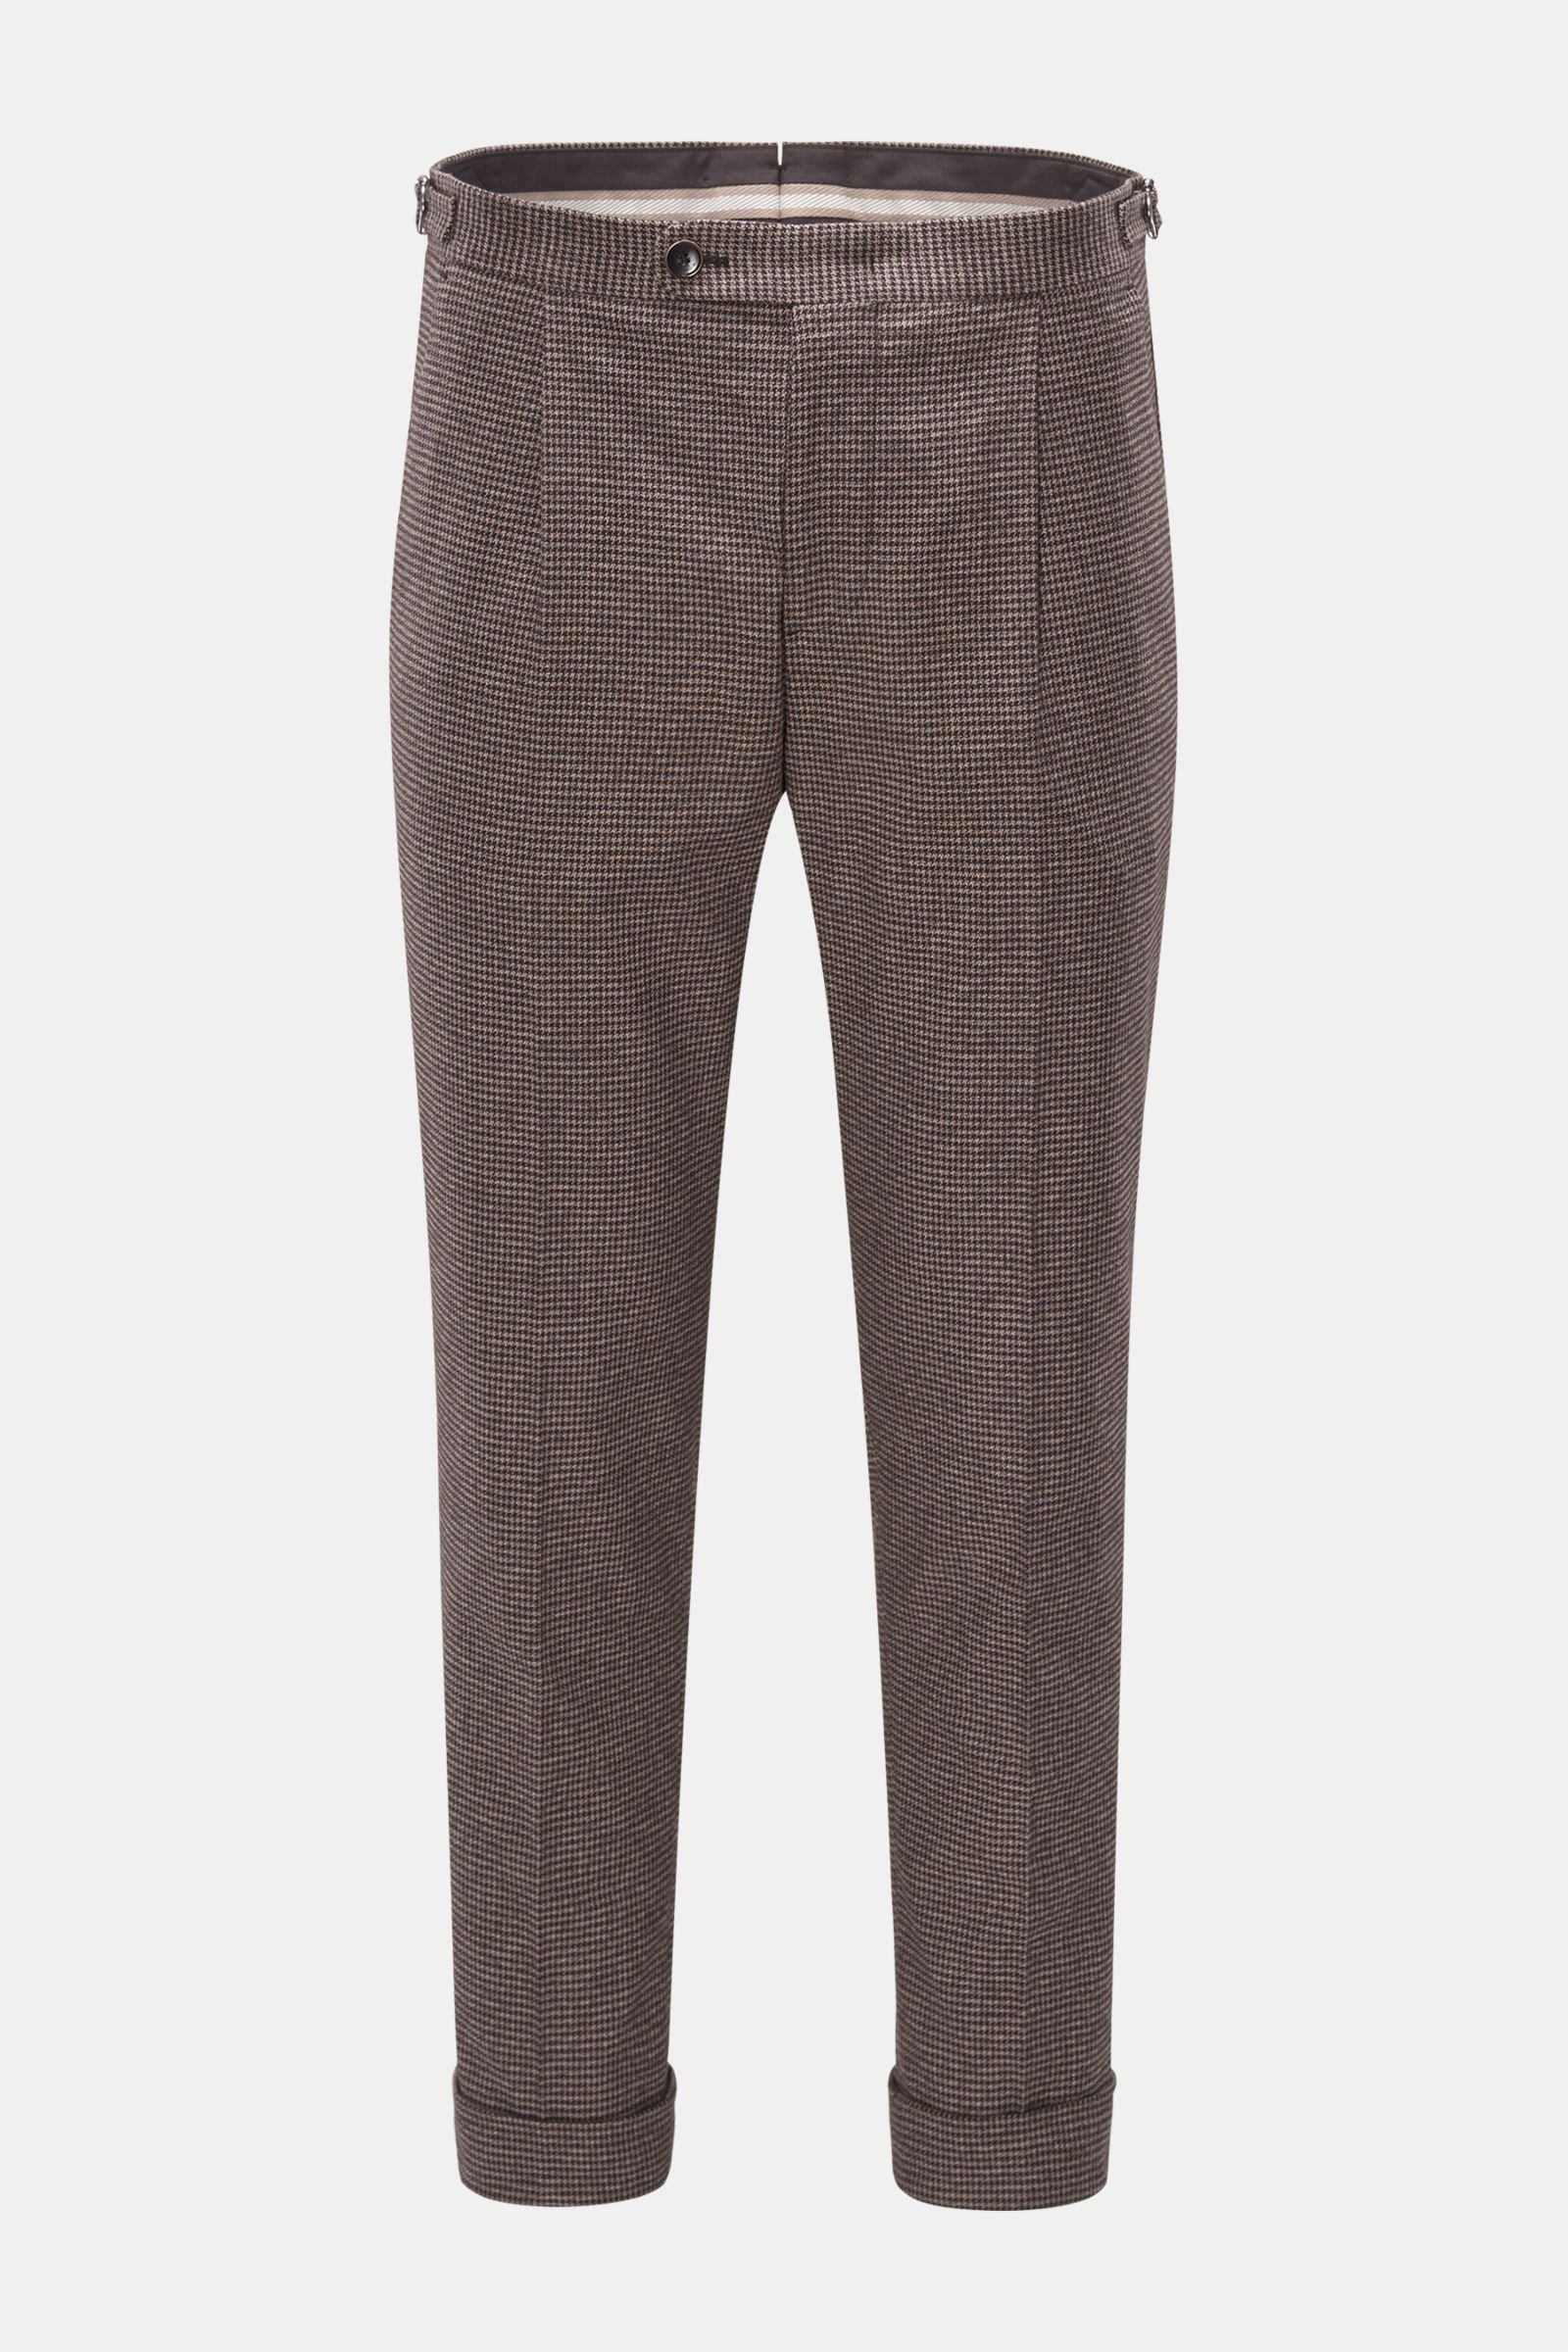 Cotton trousers 'Salva' dark brown/grey-brown checked